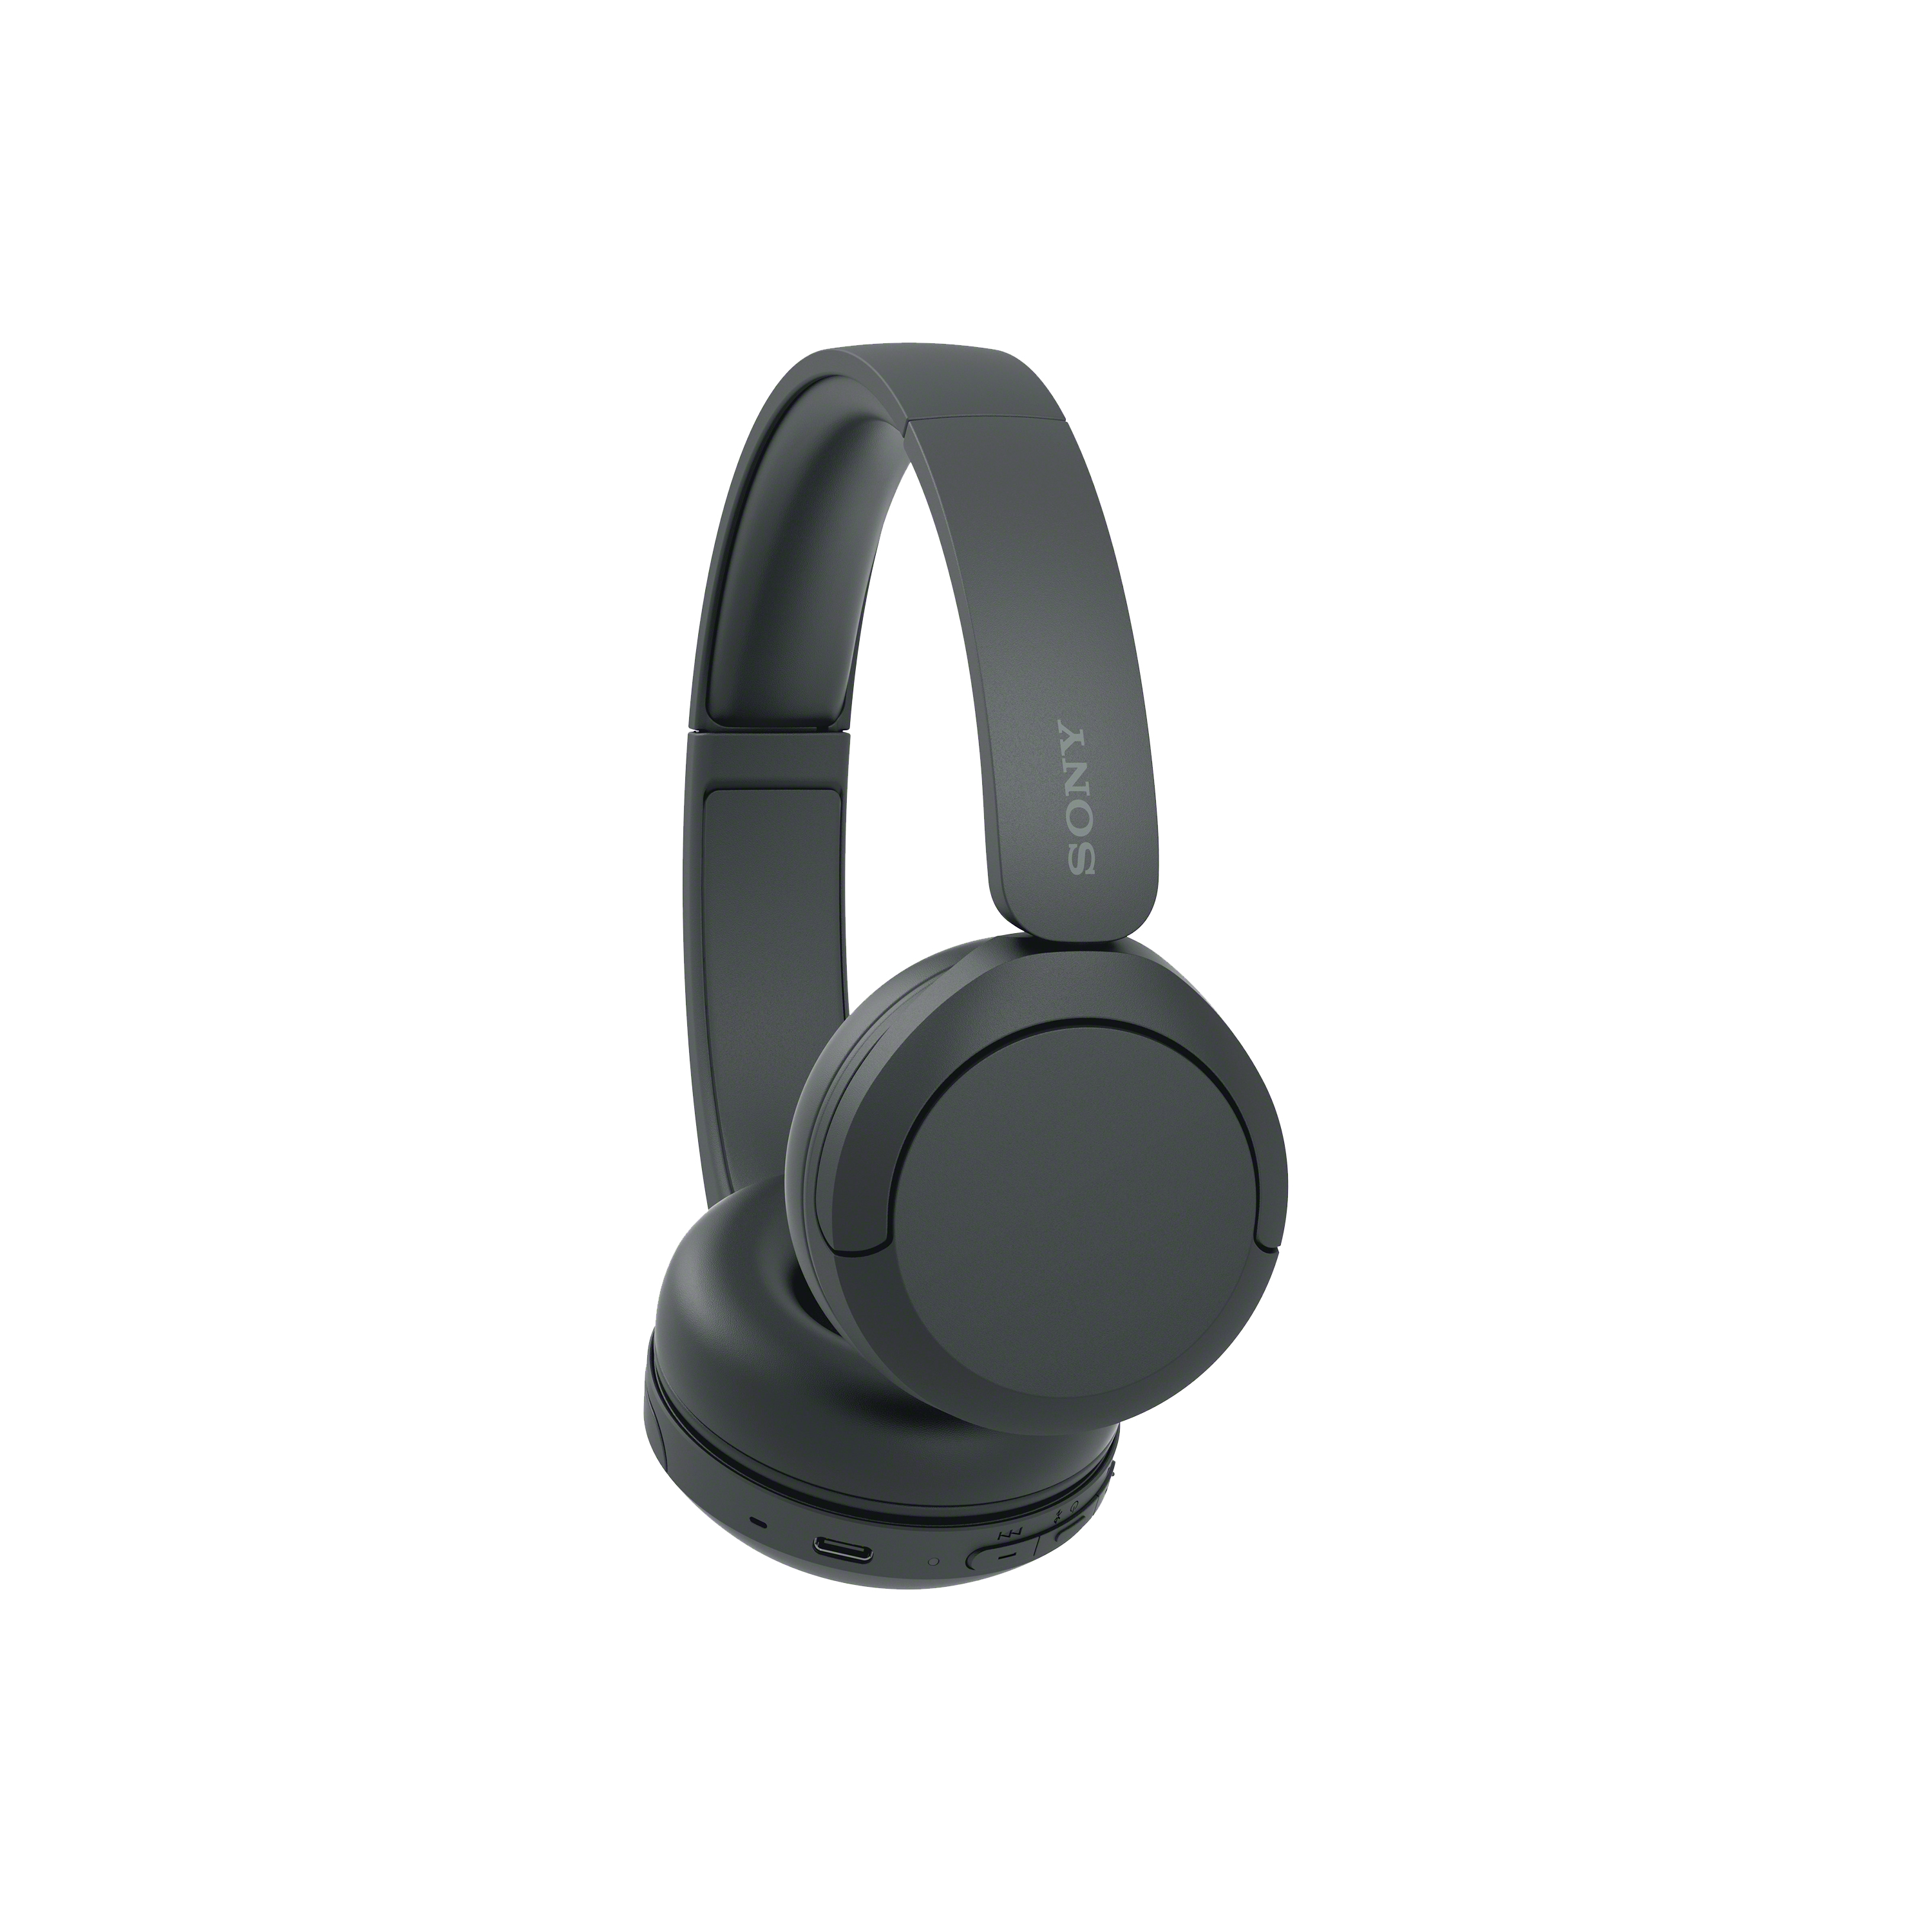 WH-CH520 - 無線耳機(黑) - Sony 台灣官方購物網站- Sony Store